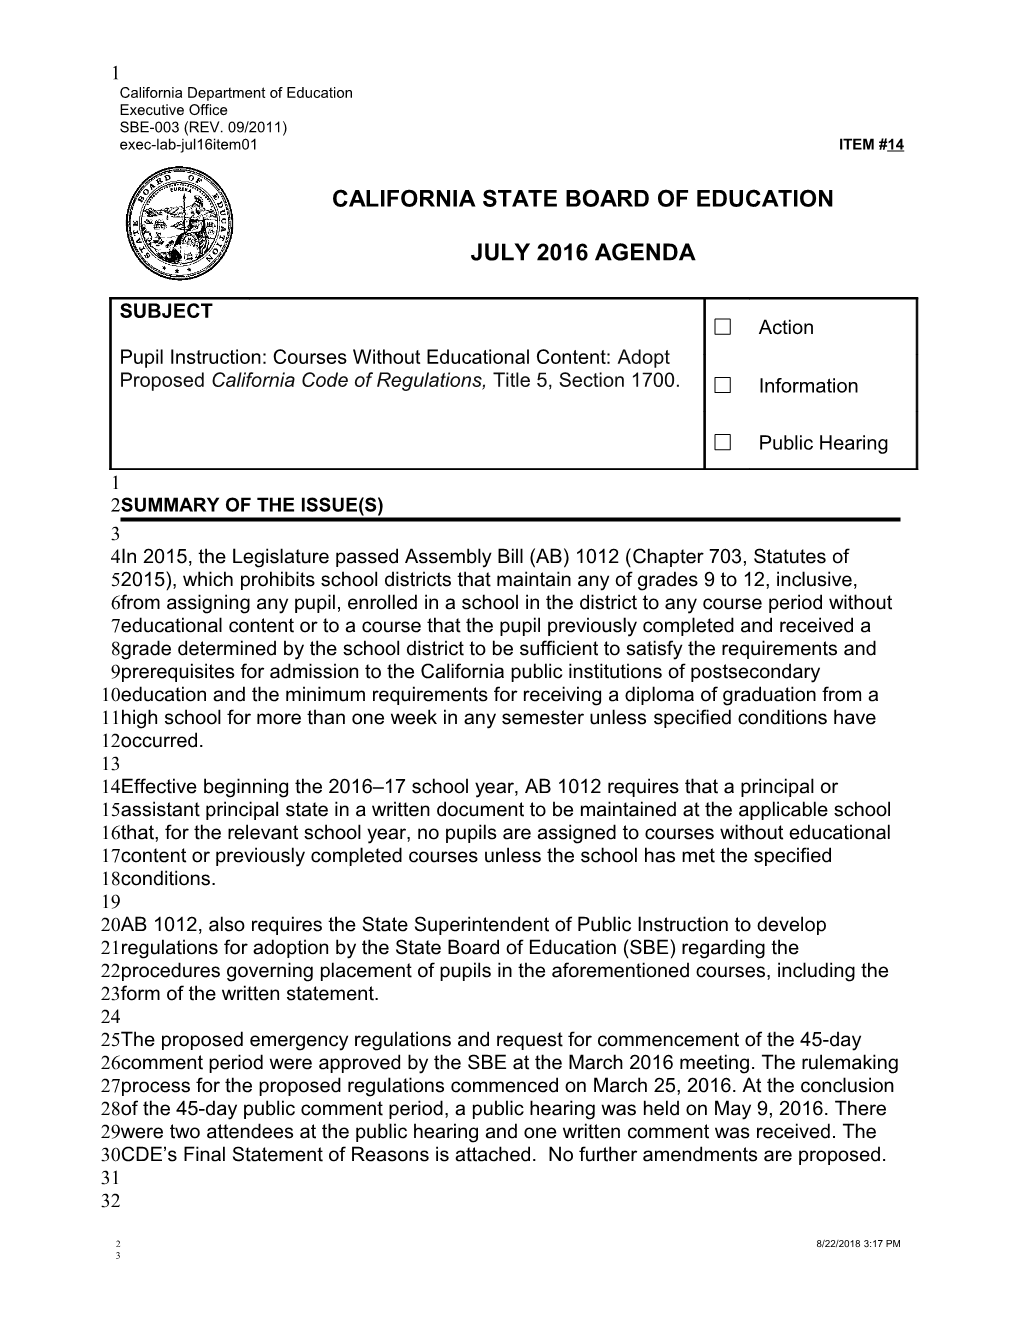 July 2016 Agenda Item 14 - Meeting Agendas (CA State Board of Education)